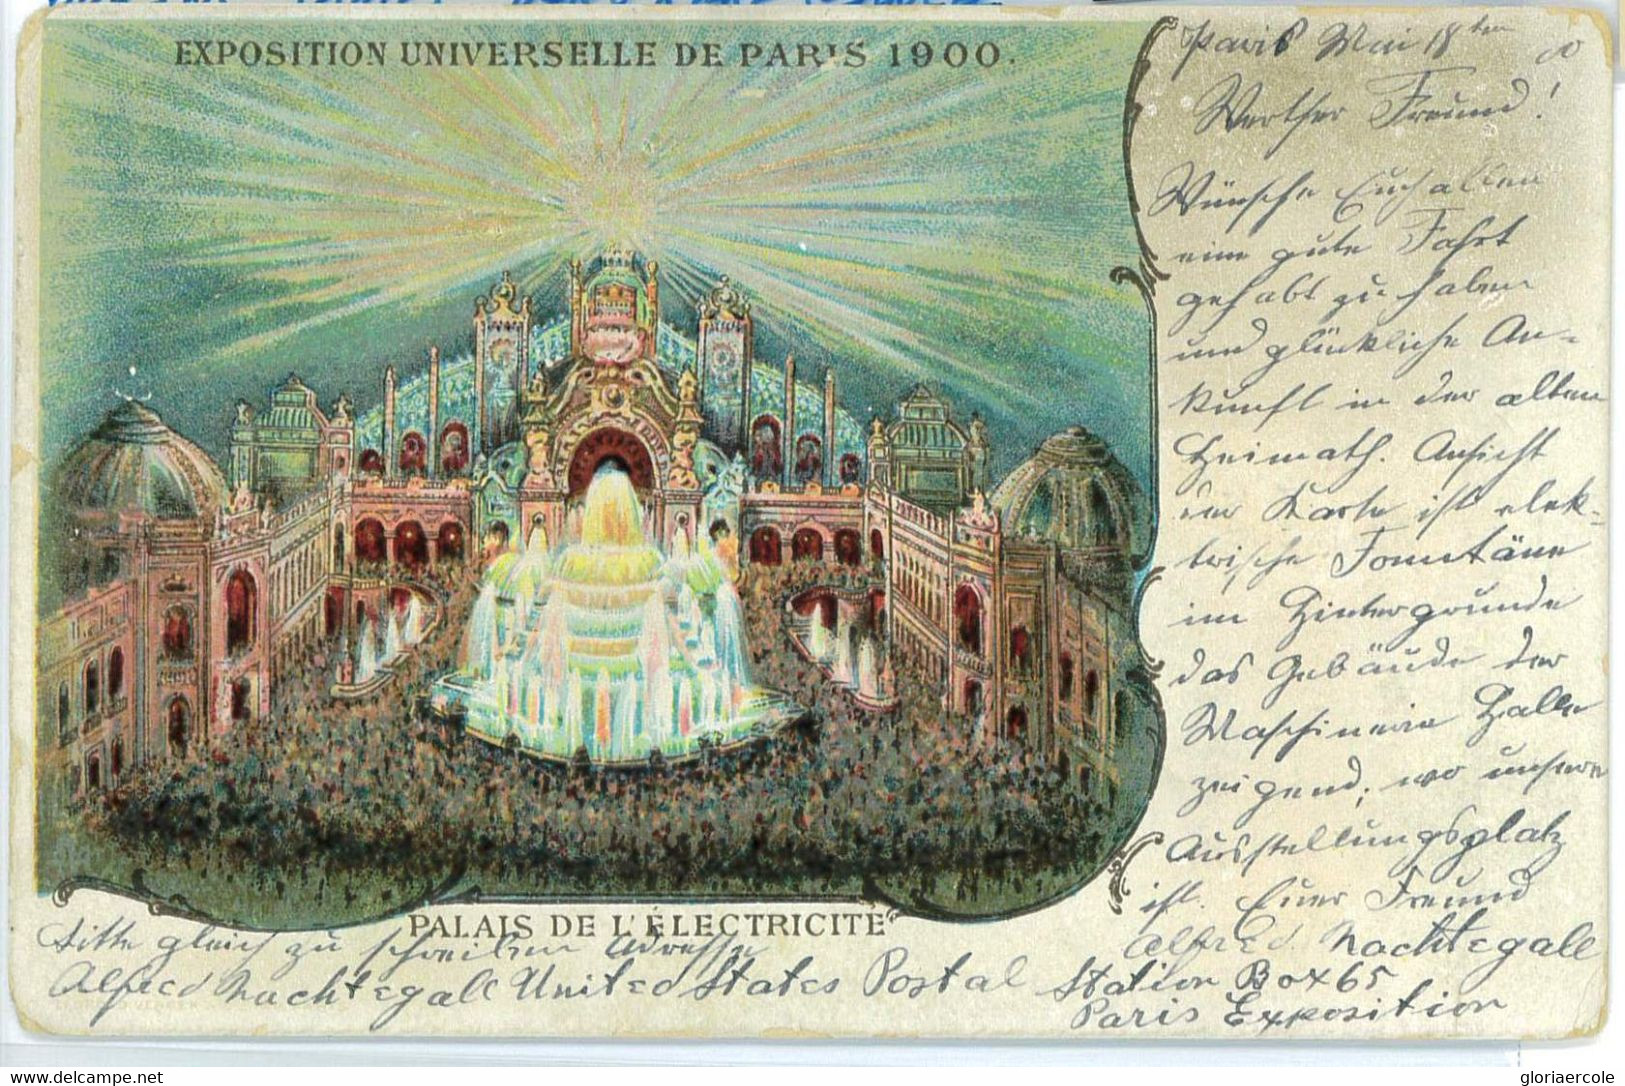 BK1873 - FRANCE - POSTAL HISTORY - RARE Olympic Games PARIS EXPO 1900  POSTMARK - Sommer 1900: Paris